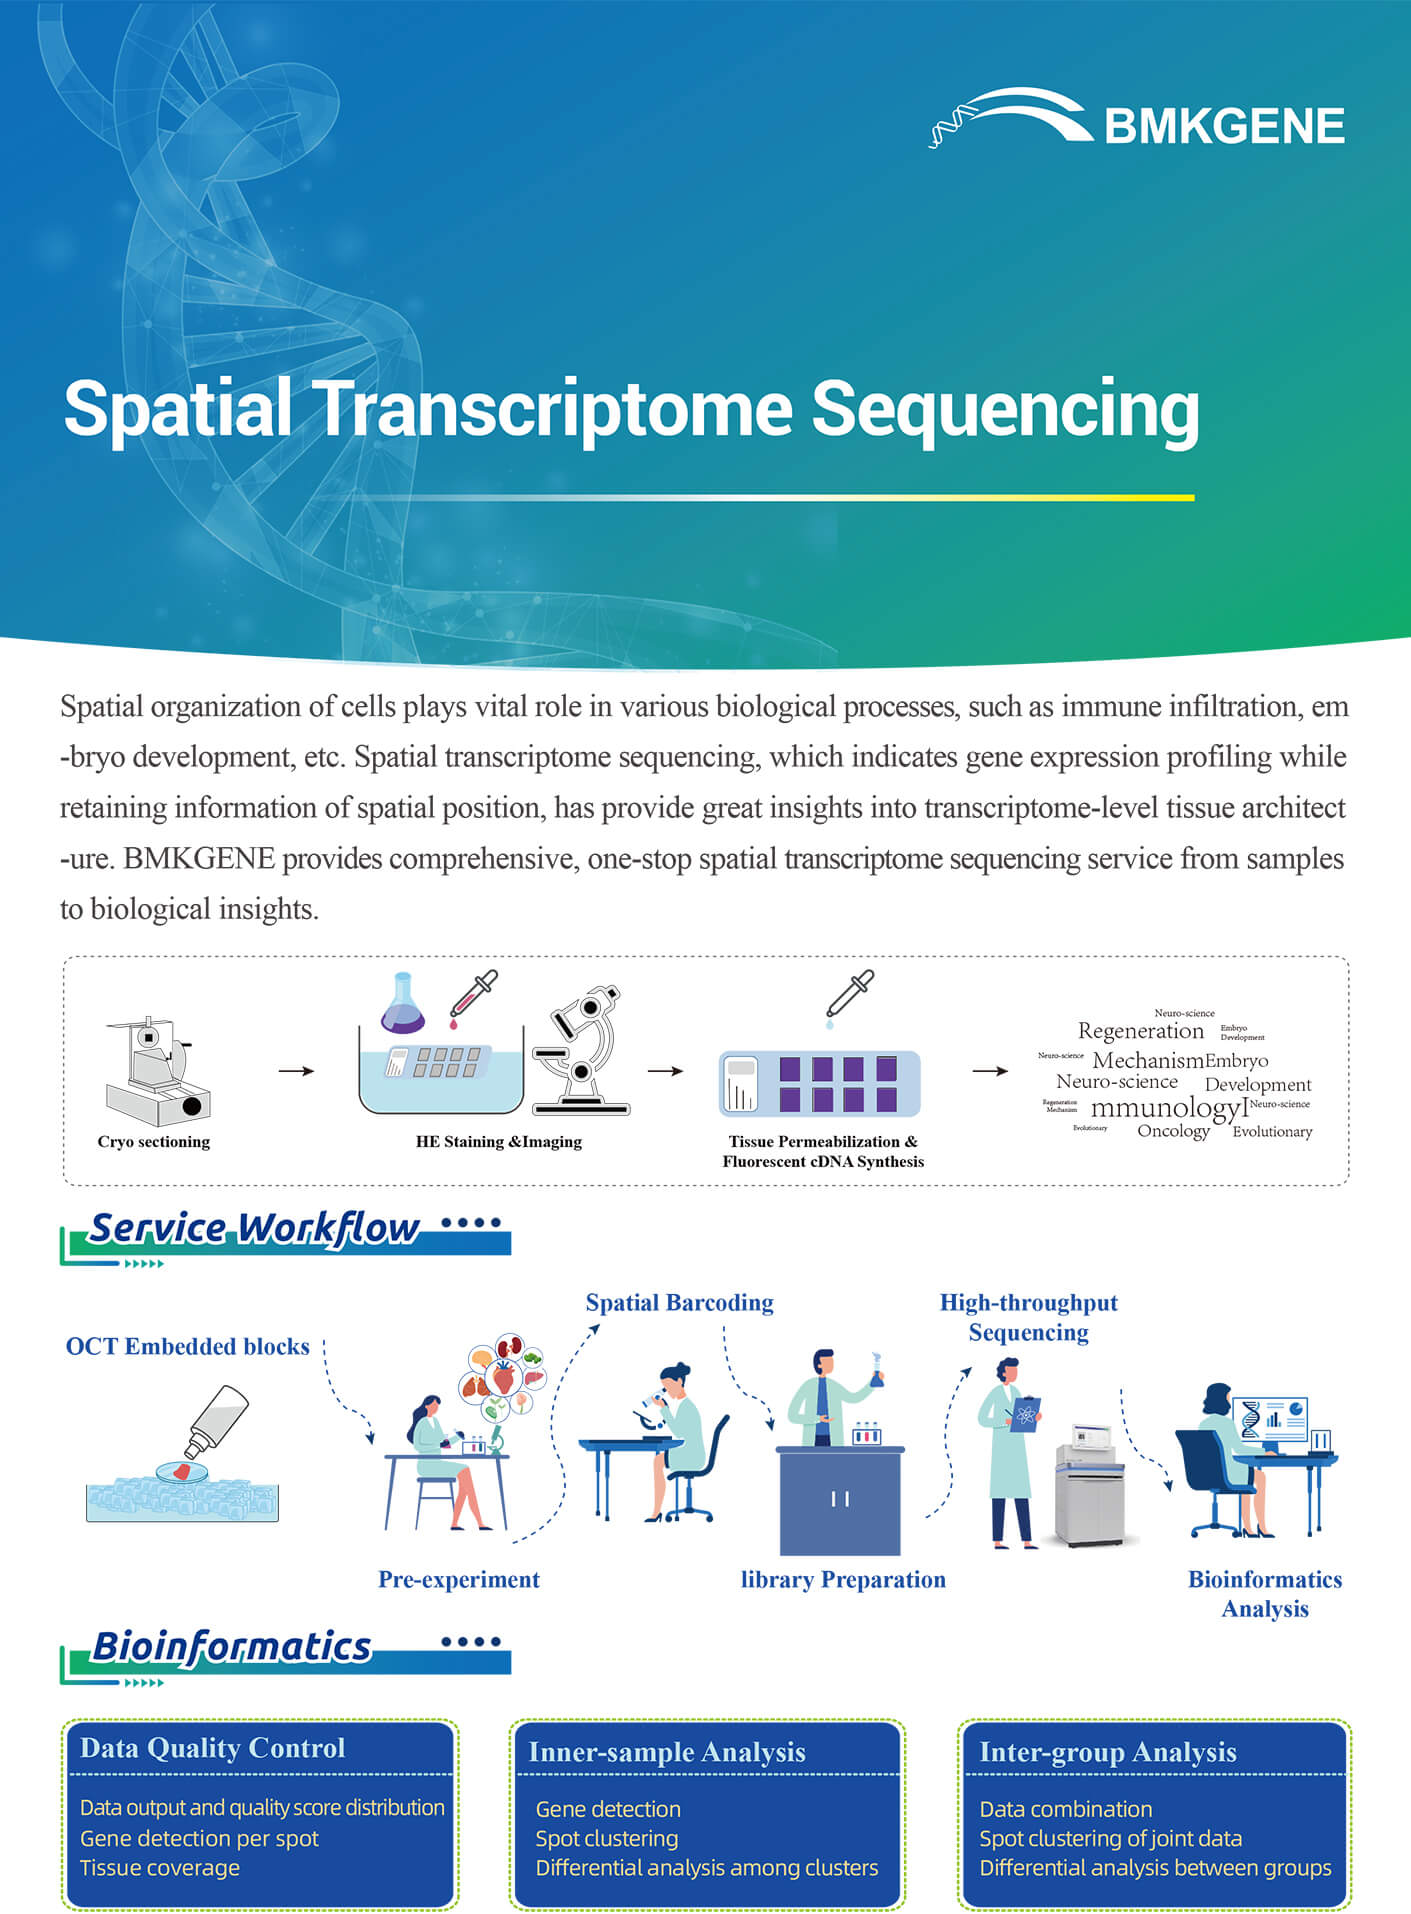 https://www.bmkgene.com/uploads/Spatial-Transscriptome-Sequencing-10X-BMKGENE-2311.pdf